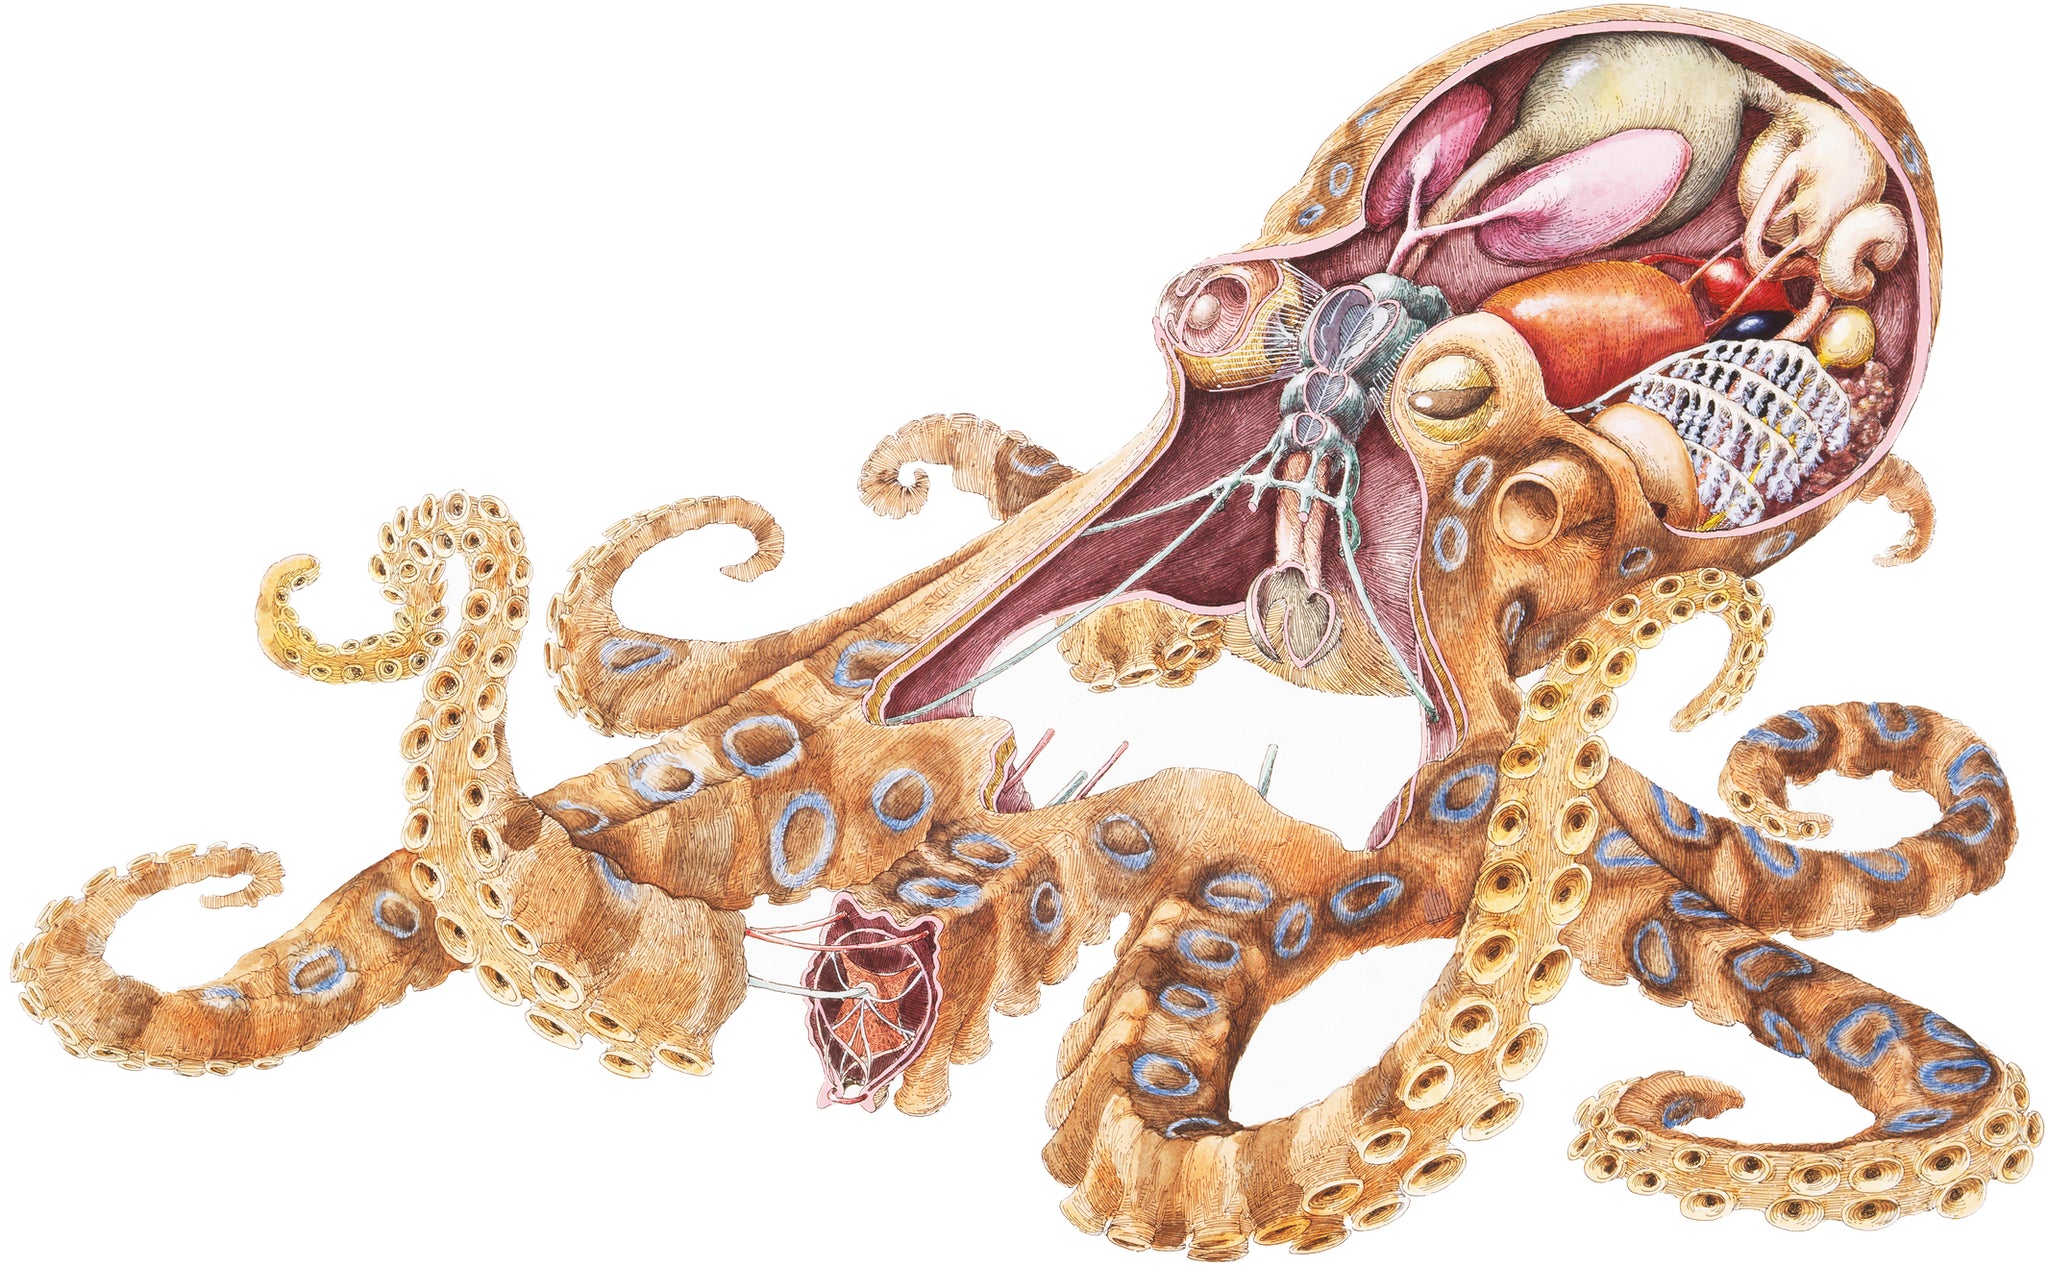 Cool Squid Octopus Anatomy Cartoon Sketch Vinyl Sticker